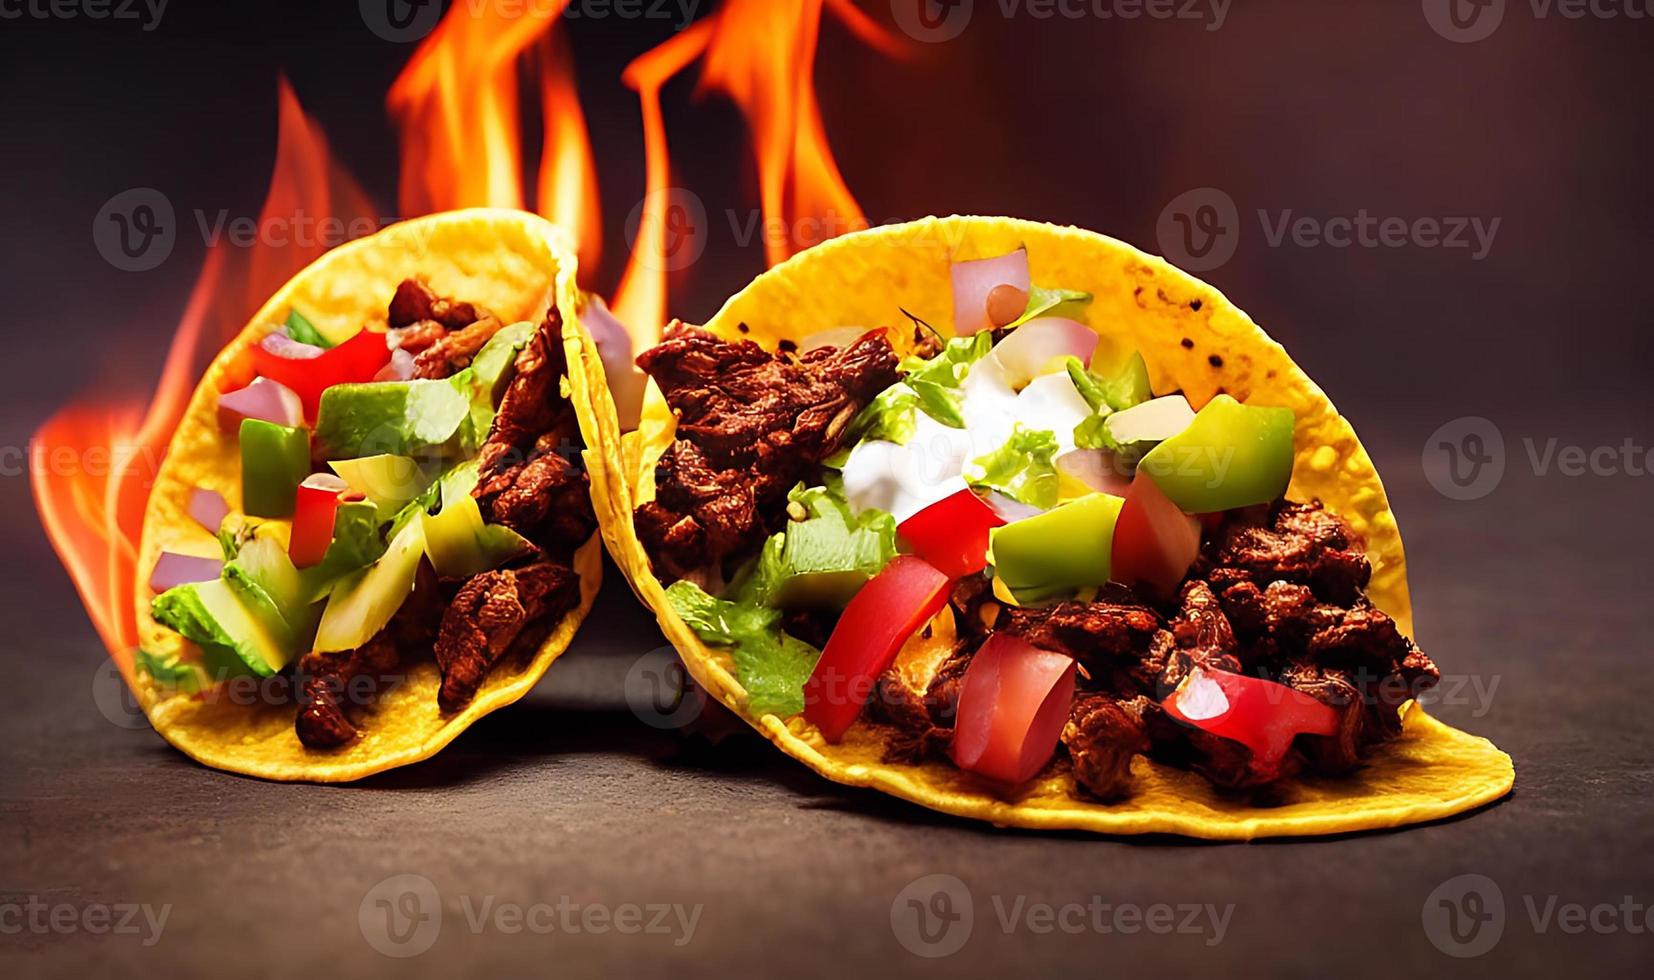 mexikanisches essen leckere tacos. foto